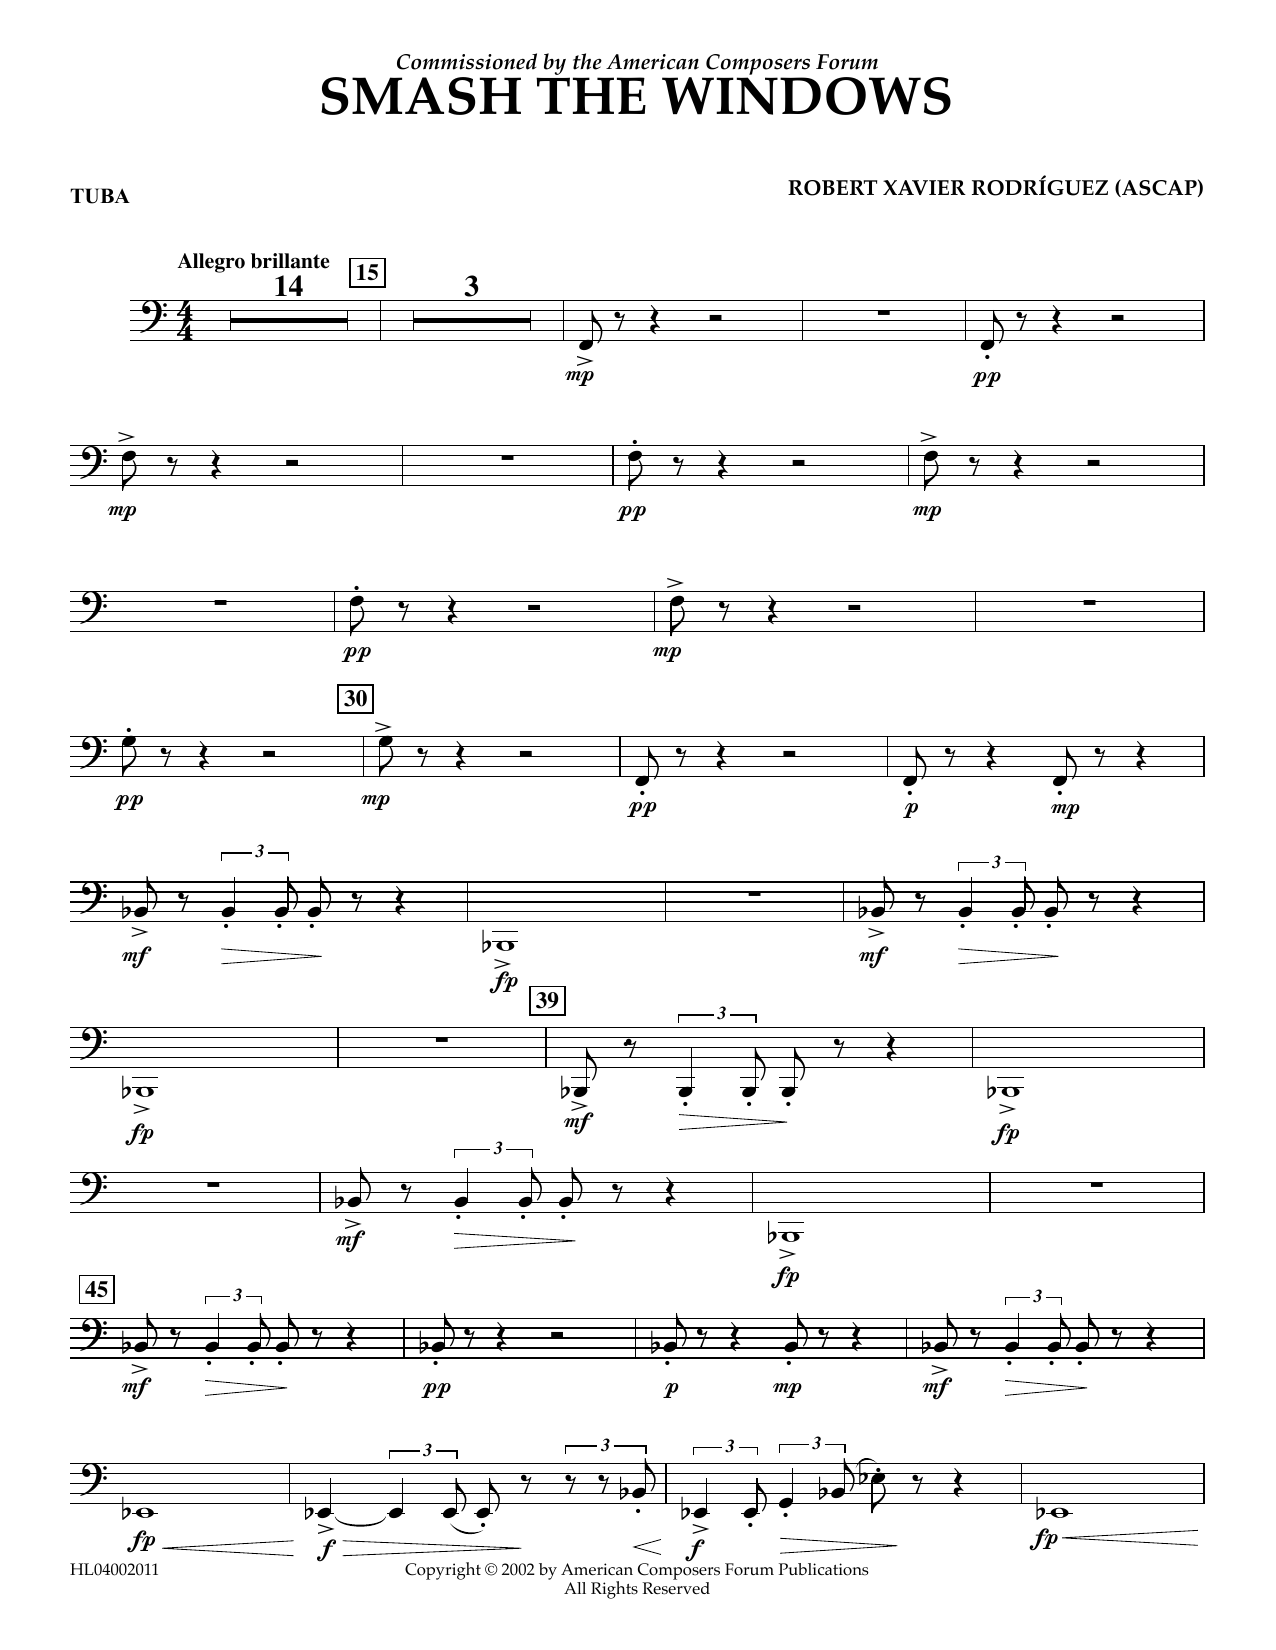 Robert Xavier Rodríguez Smash the Windows - Tuba Sheet Music Notes & Chords for Concert Band - Download or Print PDF